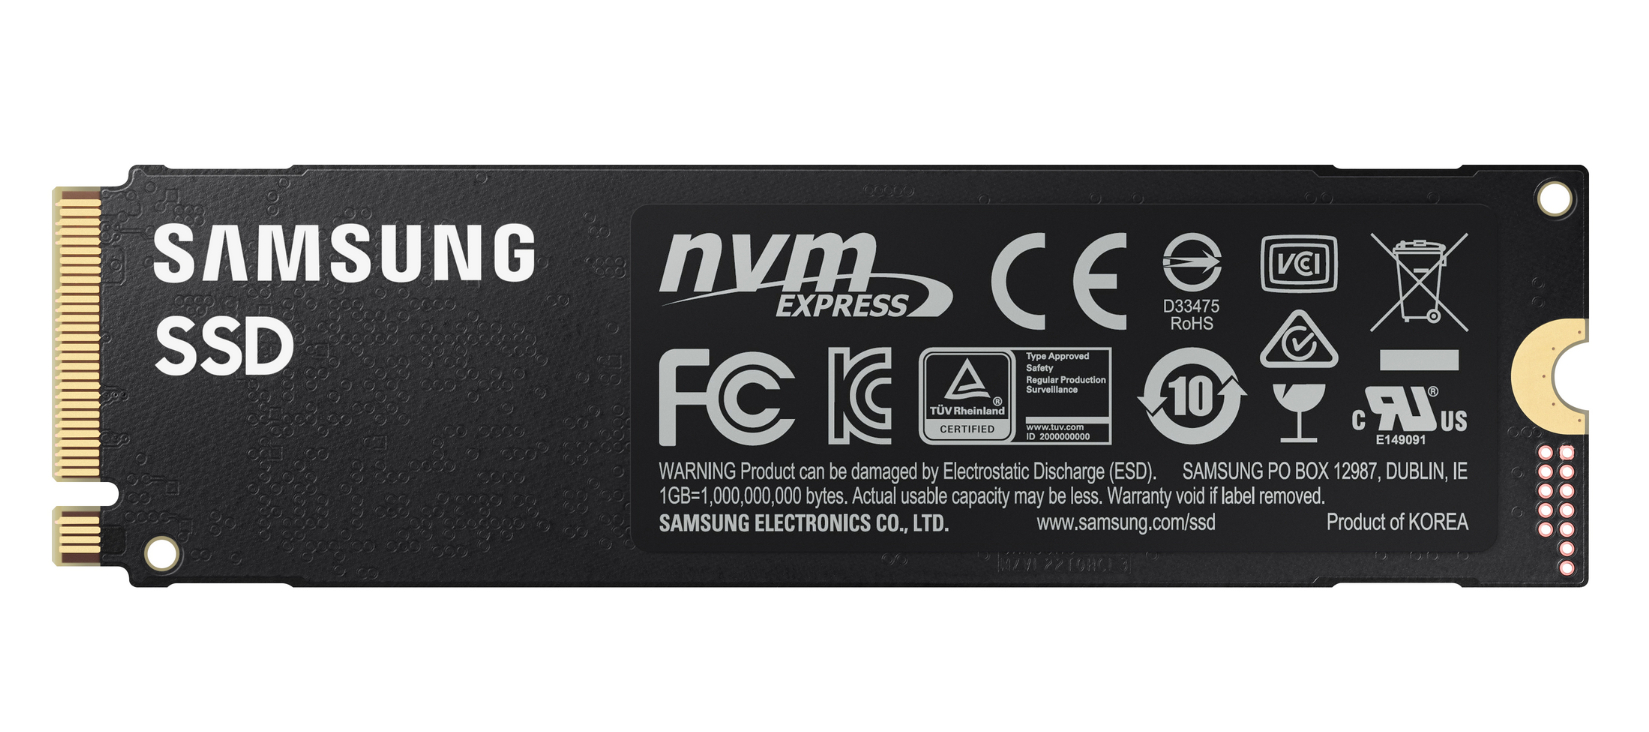 2 NVMe, Retail, TB intern Playstation M.2 SSD PRO, via Festplatte 980 kompatibel, 5 SAMSUNG